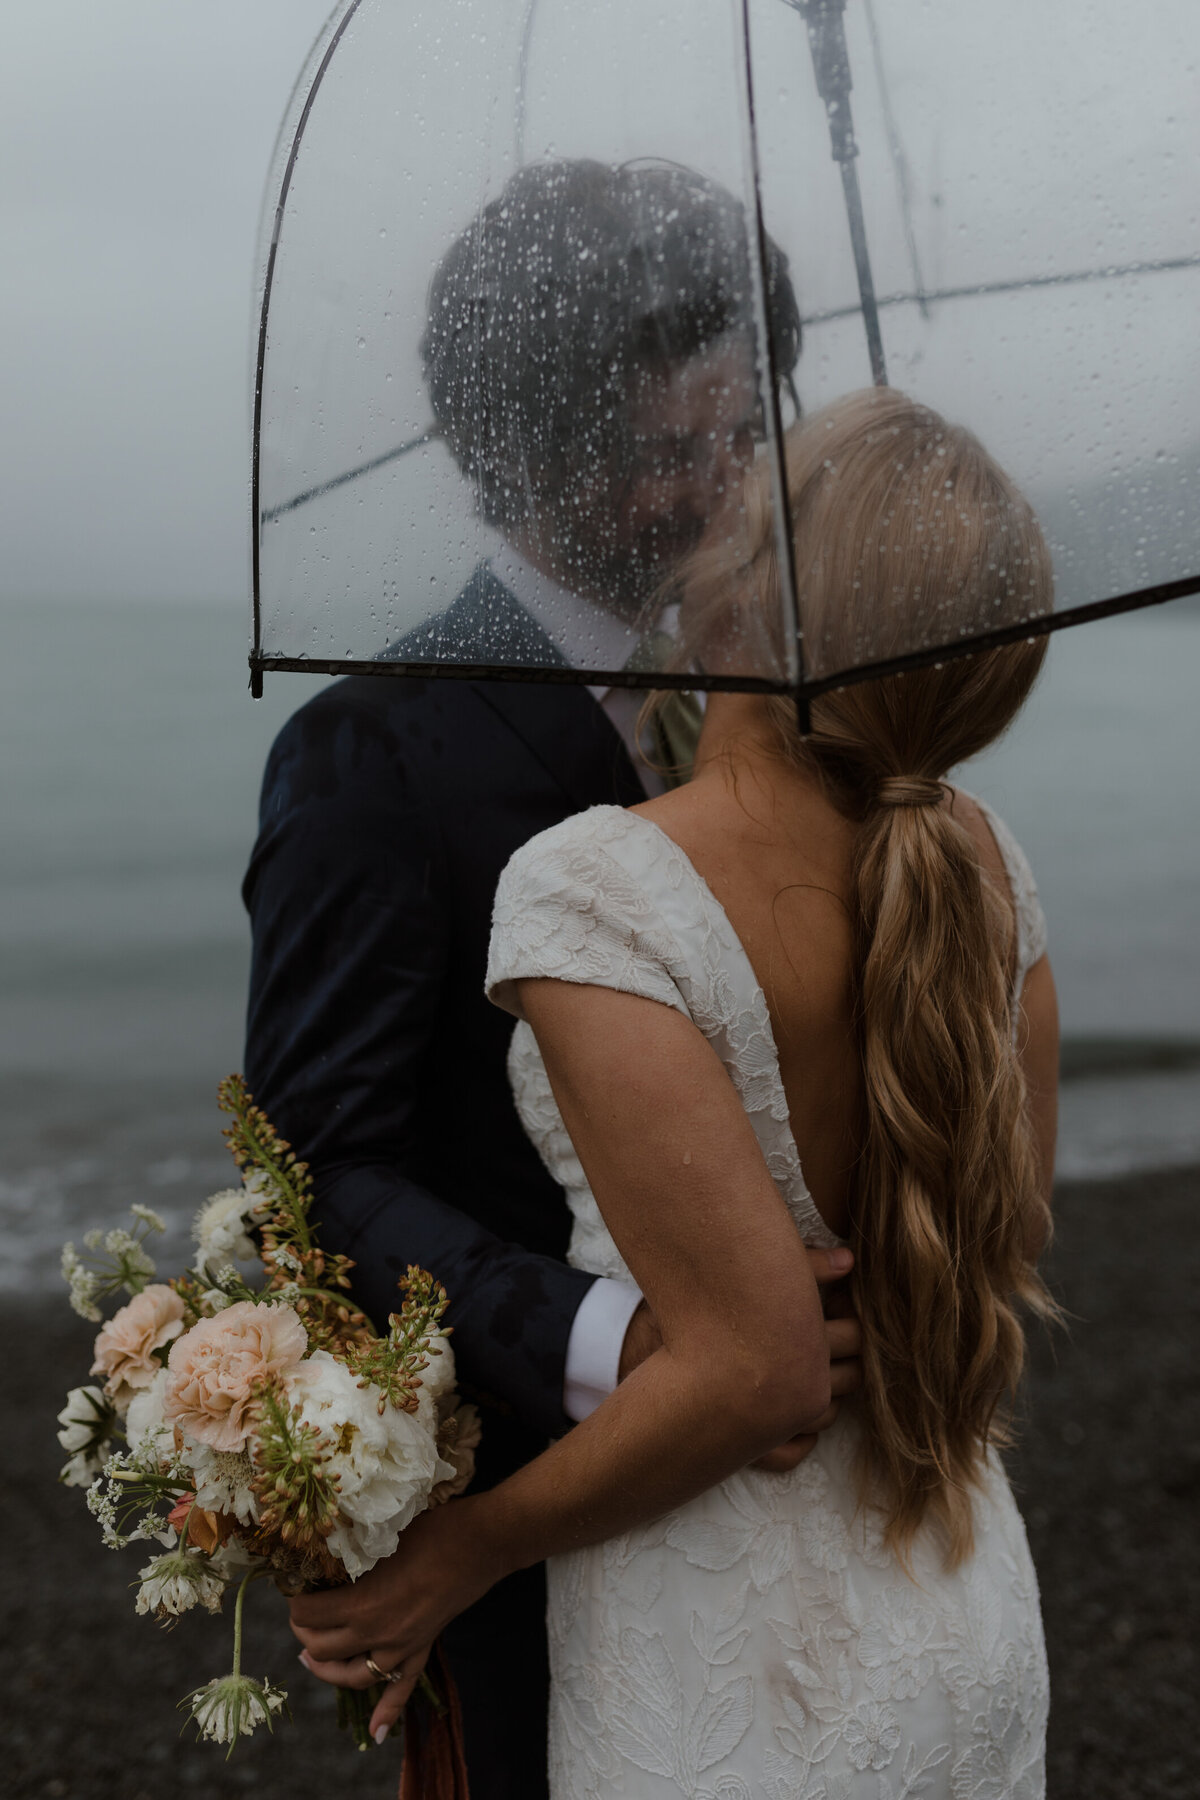 Wedding couple kissing under umbrella